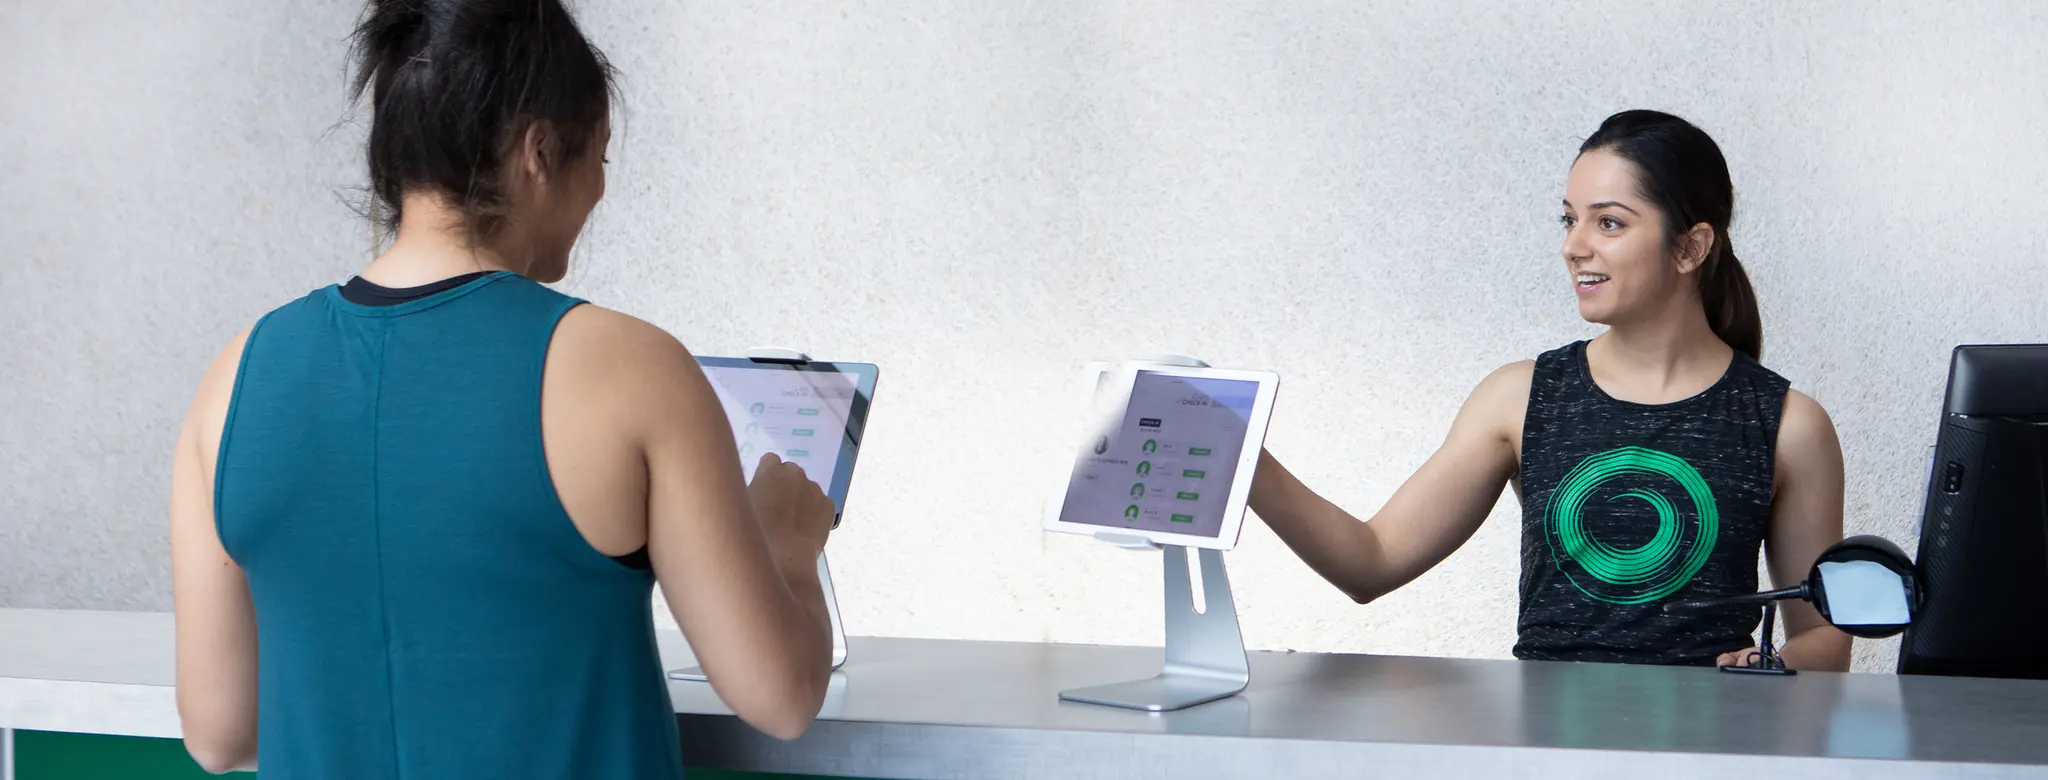 Women checks into fitness studio using iPad.